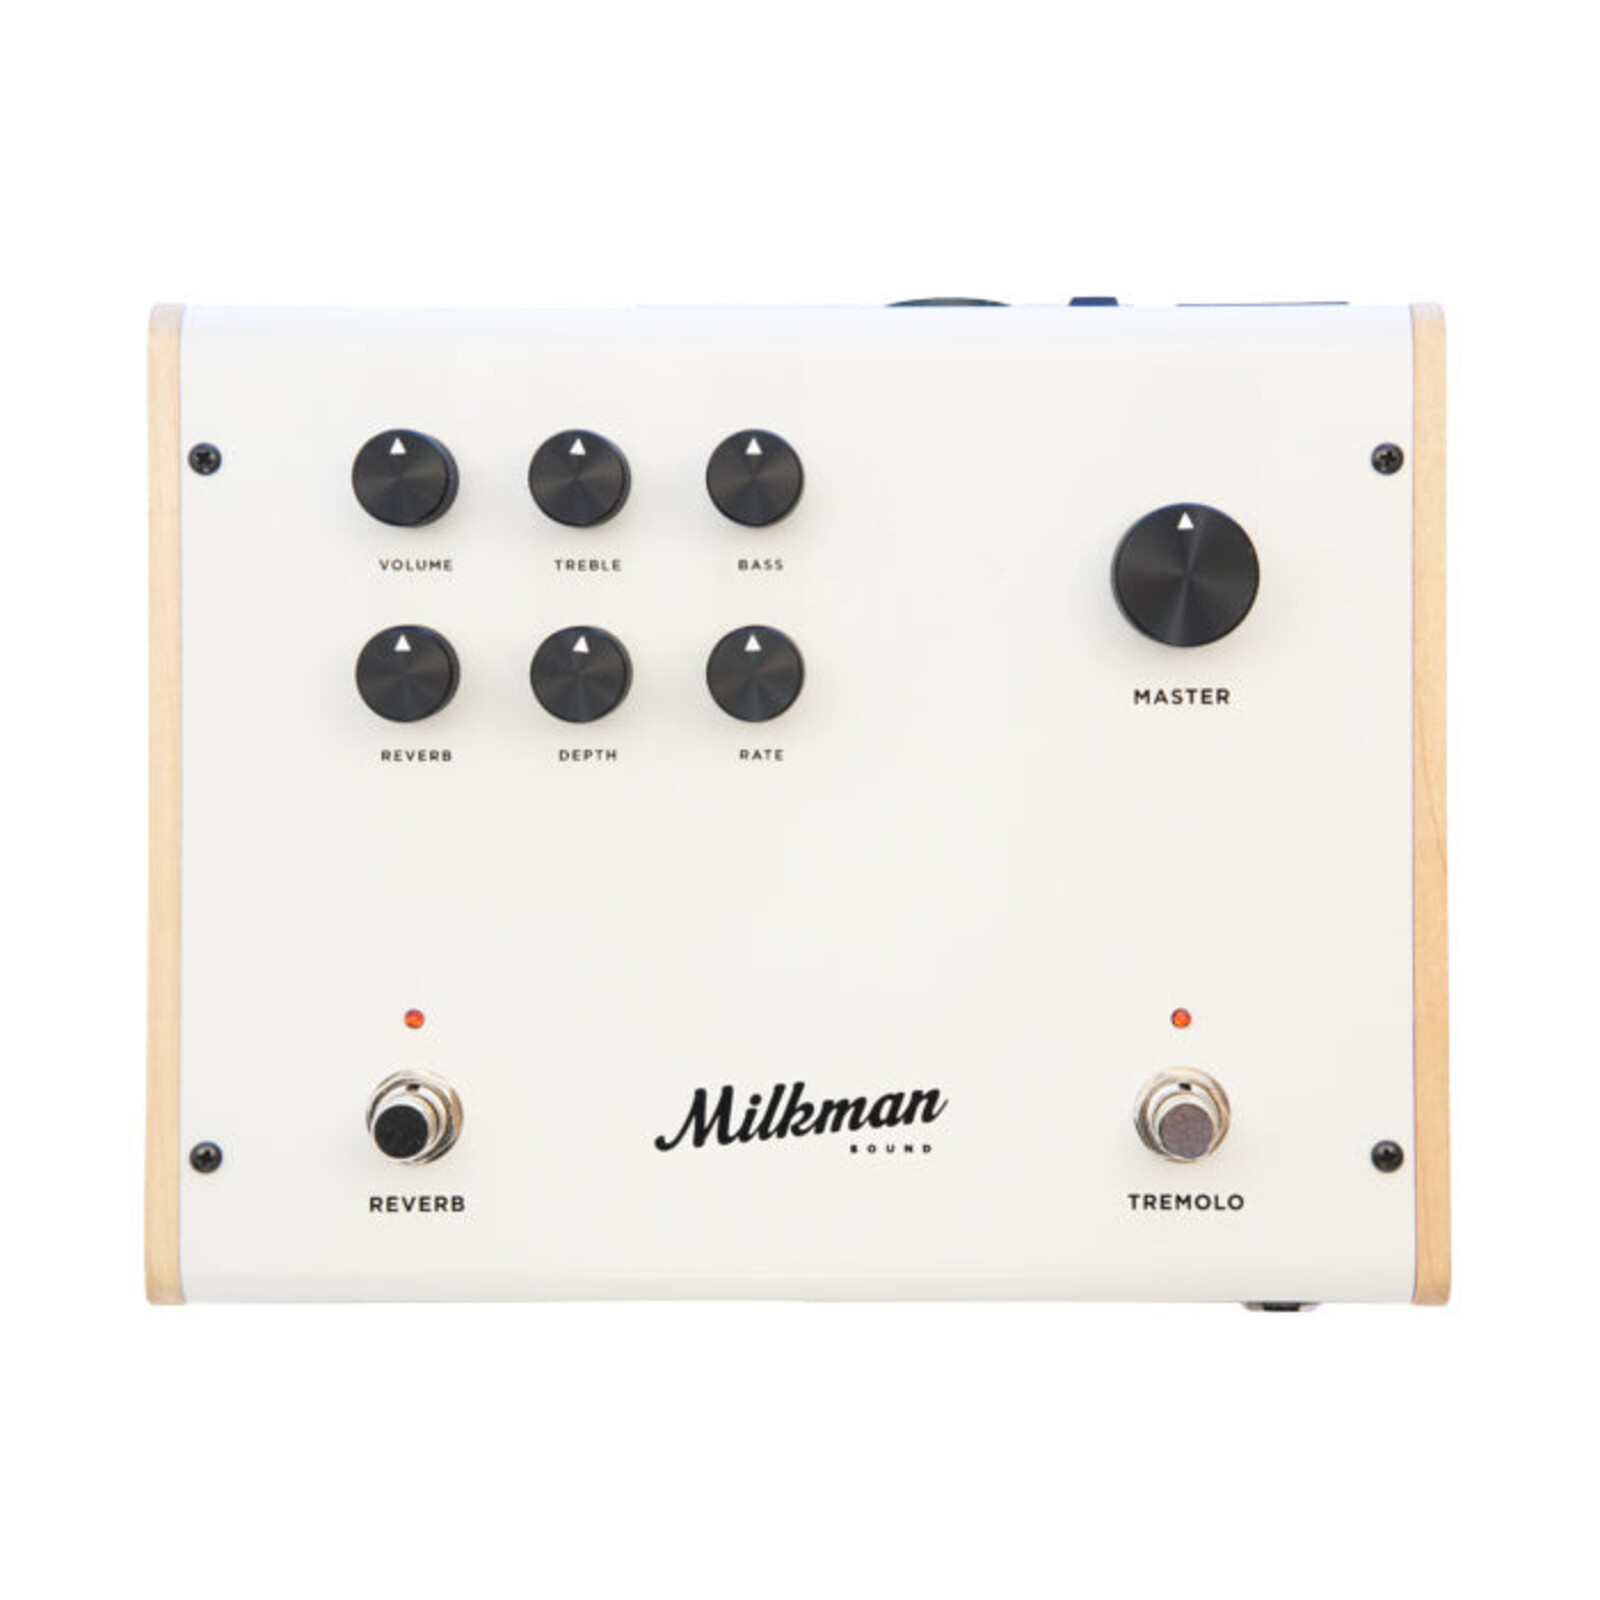 Milkman Sound Milkman Sound The Amp 50 guitar amp pedal